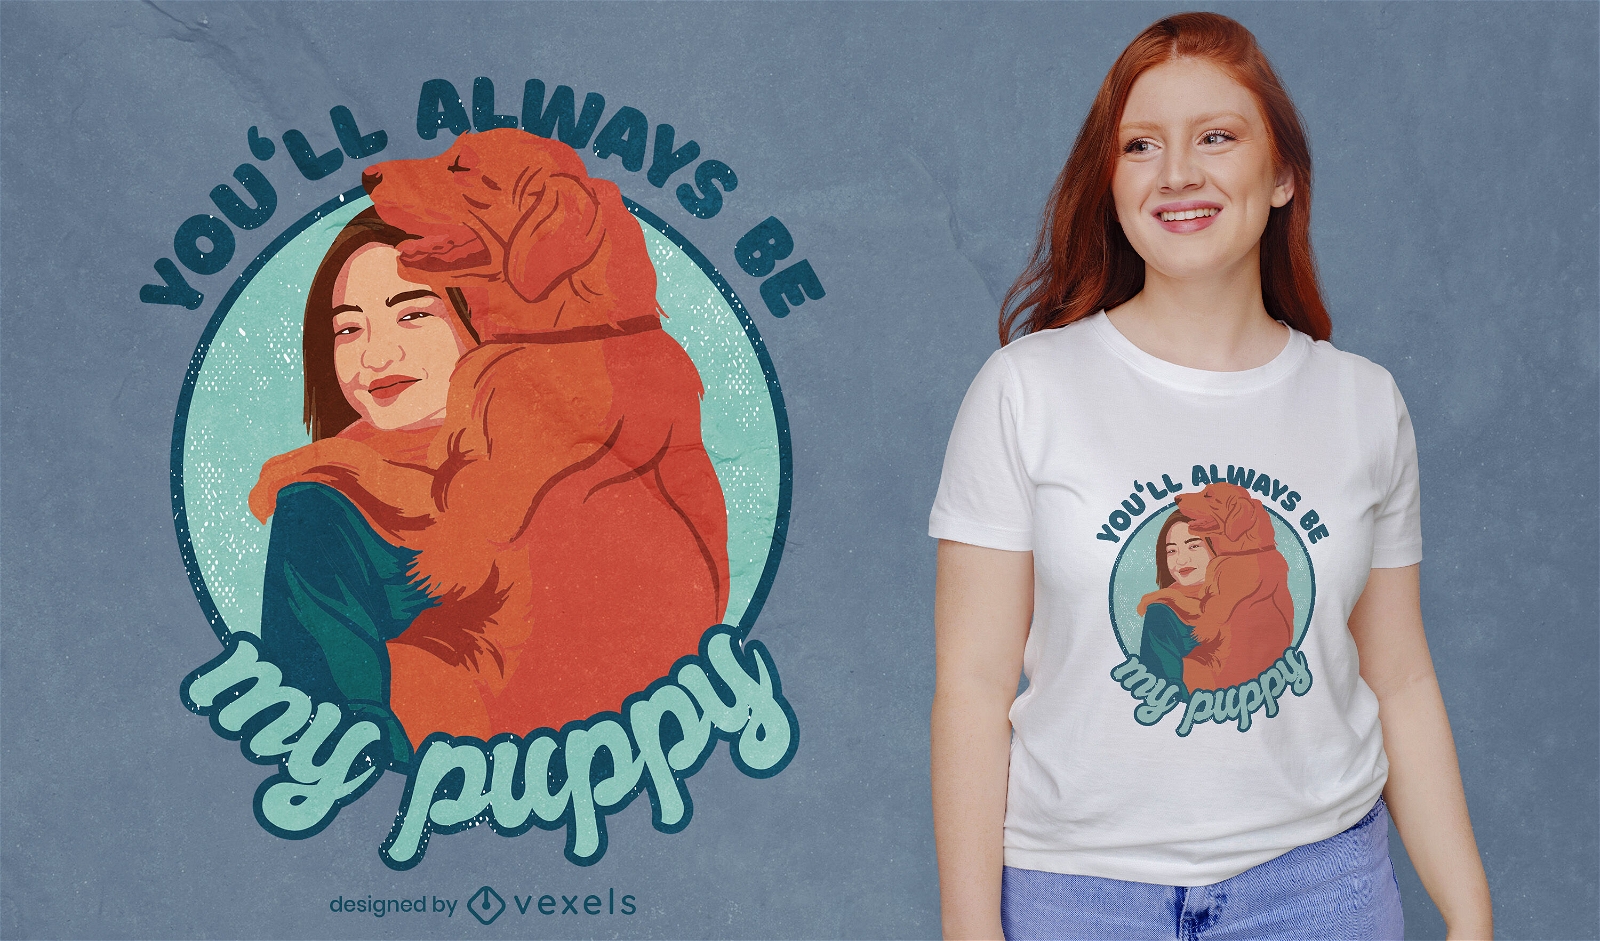 Golden retriever puppy quote t-shirt design